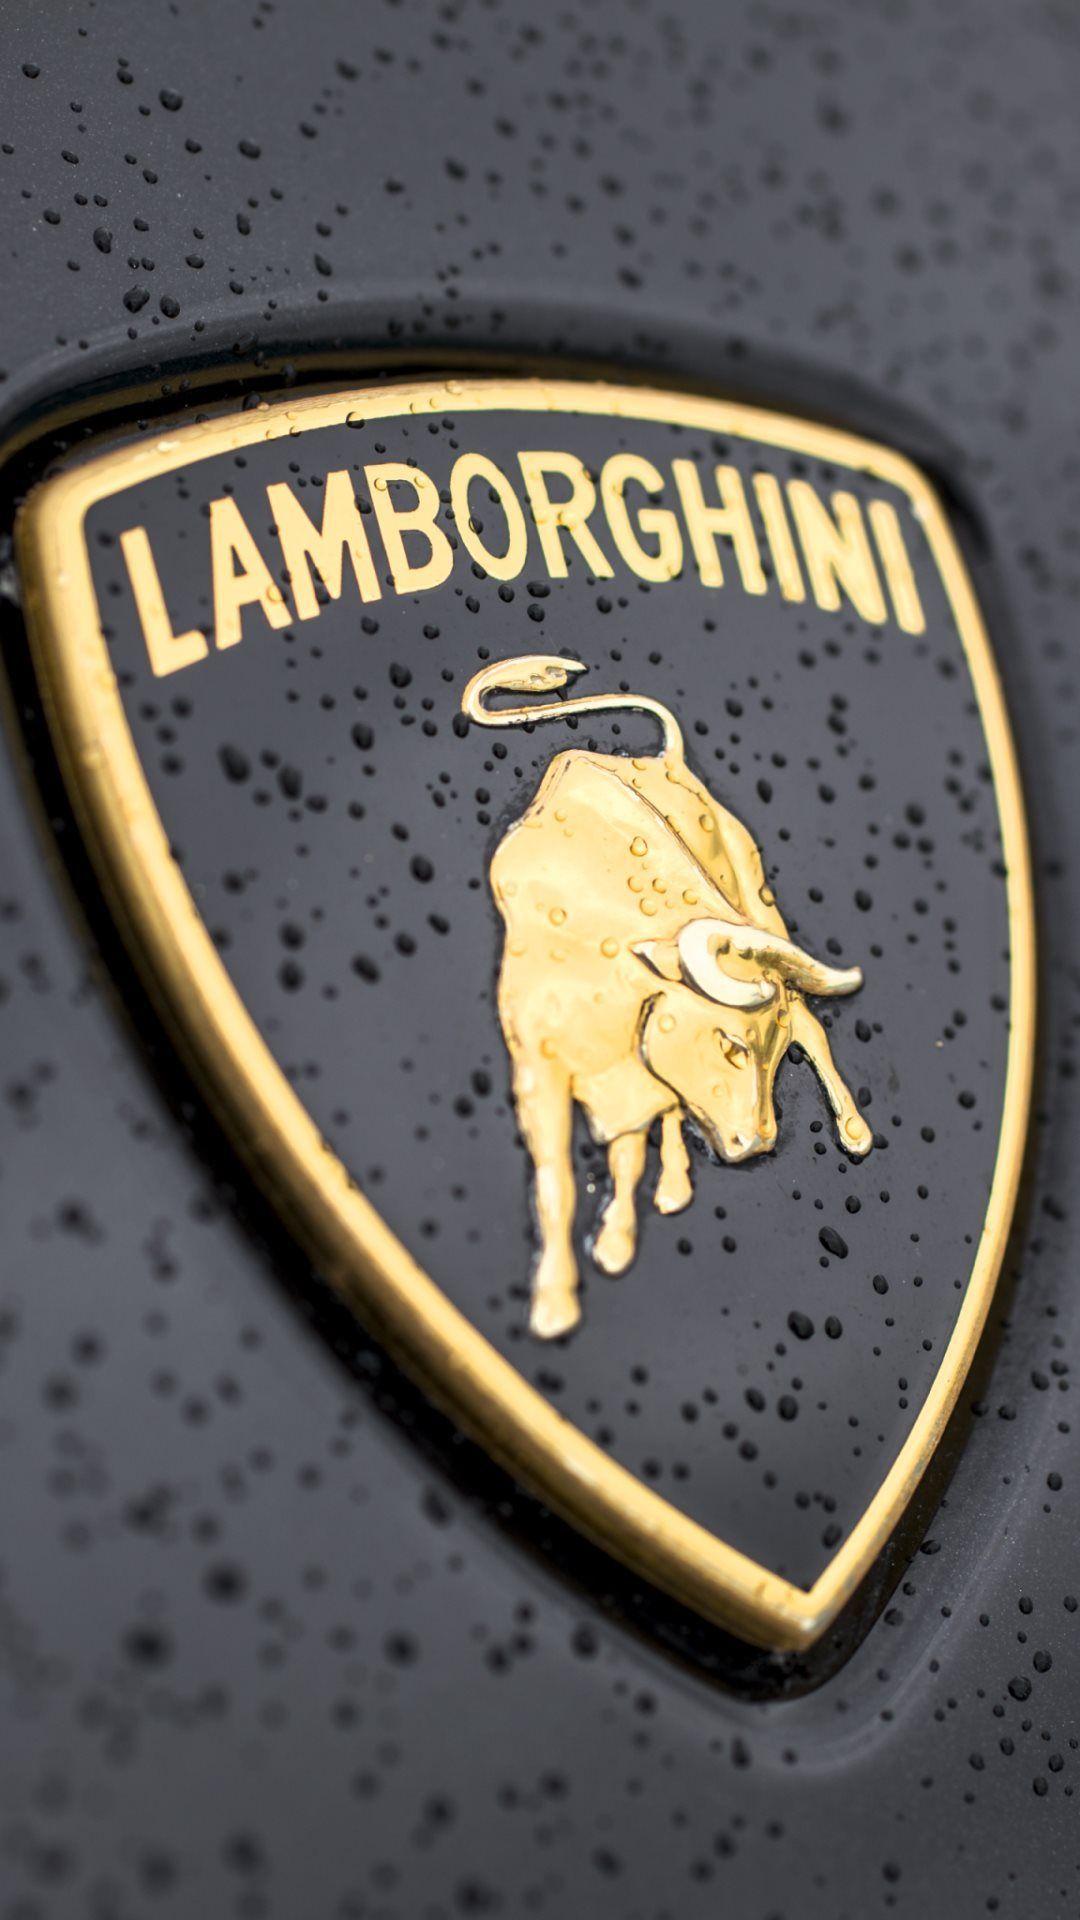 Lamborghini Logo - Lamborghini logo quality htc one wallpaper and abstract